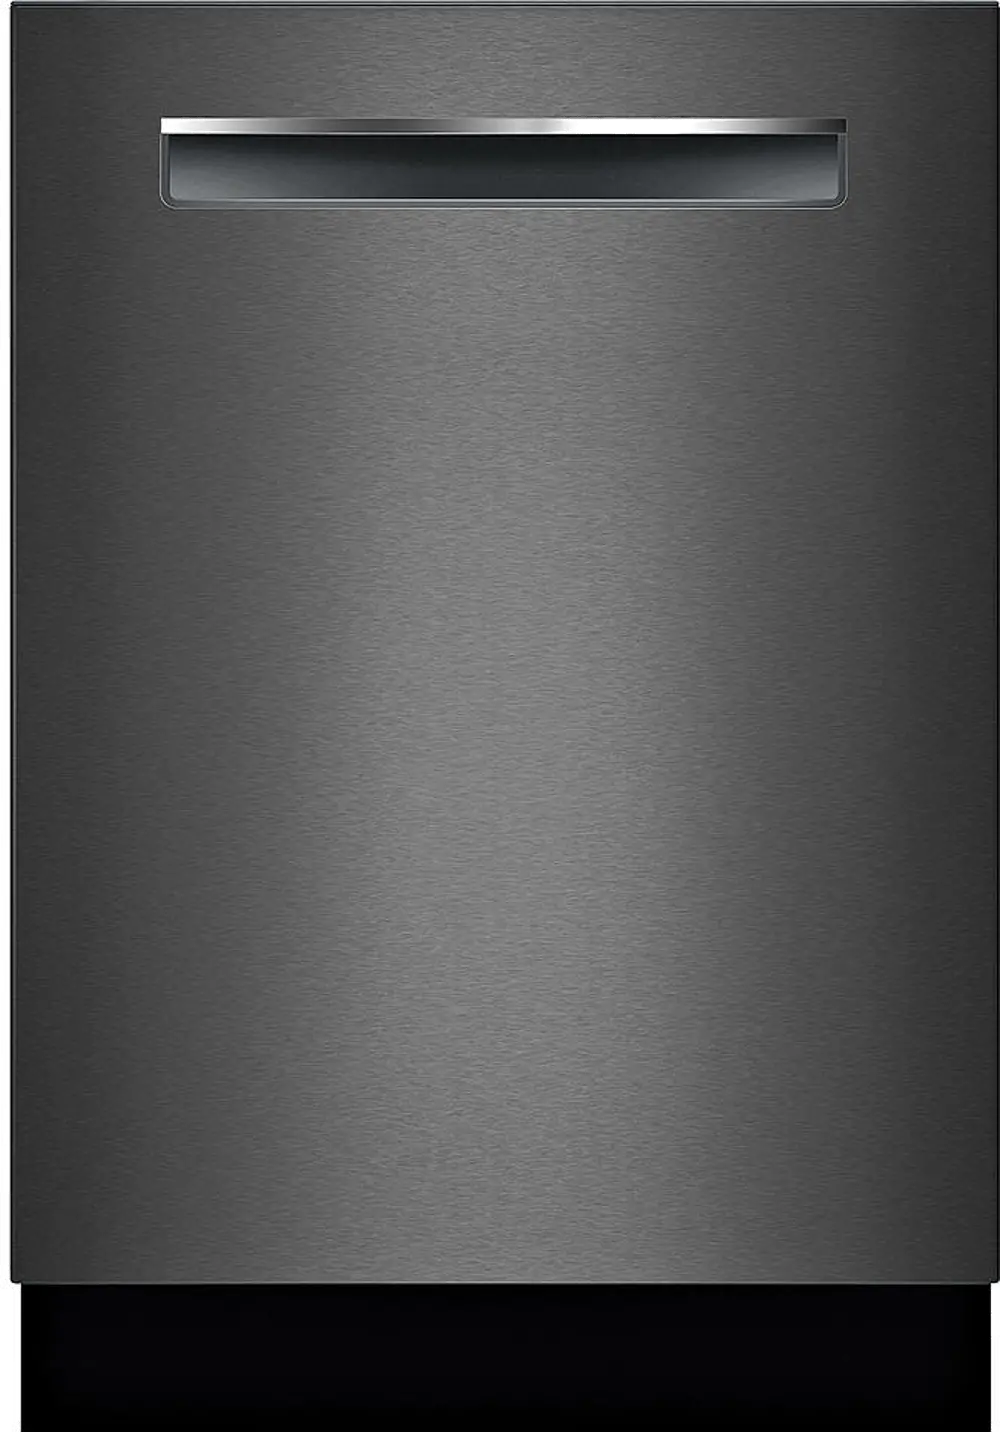 SHPM78W54N Bosch Dishwasher - Black Stainless Steel 800 Series-1